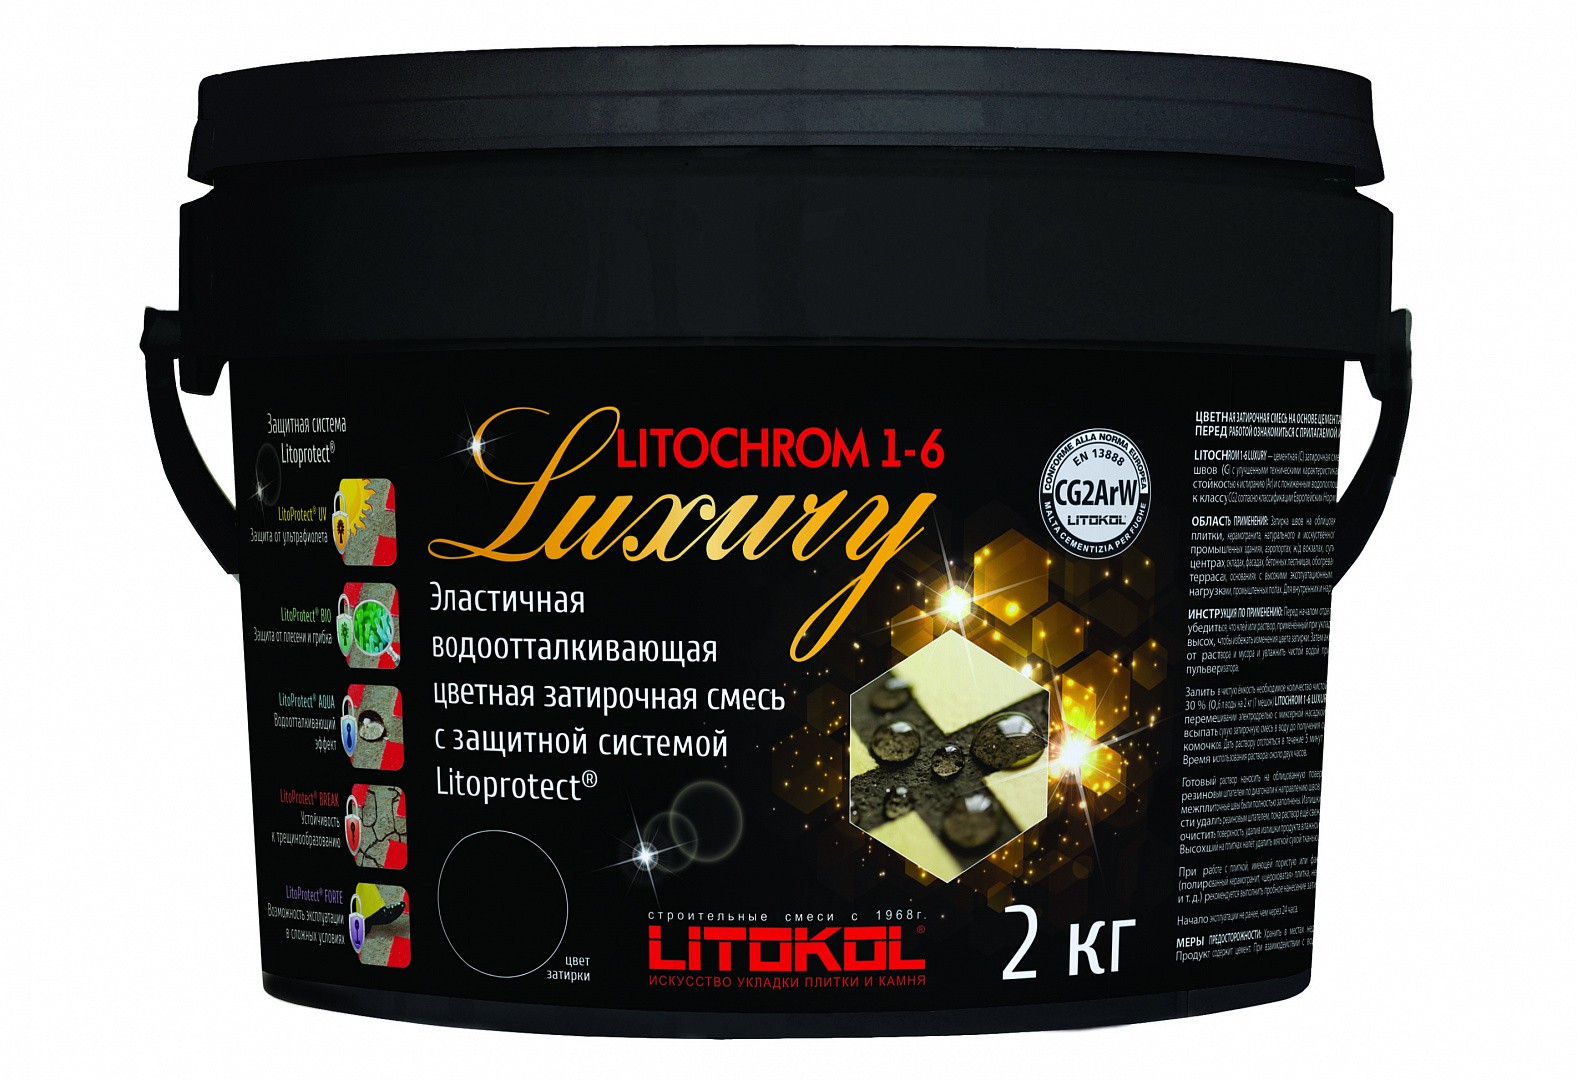 Цементная затирочная смесь LITOCHROM 1-6 LUXURY C.480